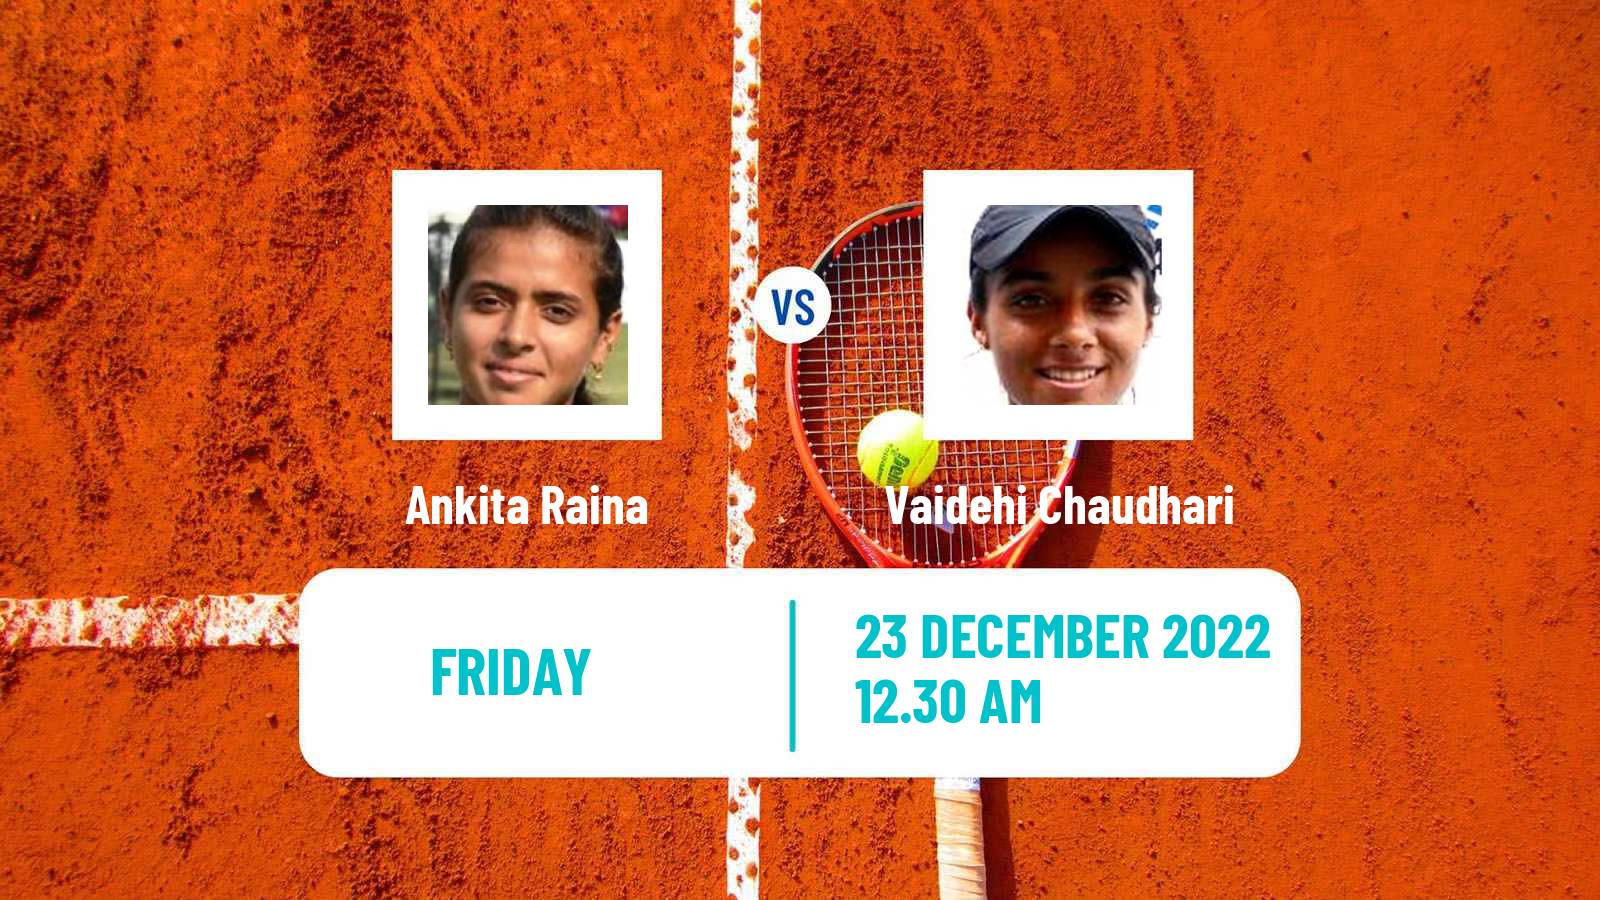 Tennis ITF Tournaments Ankita Raina - Vaidehi Chaudhari